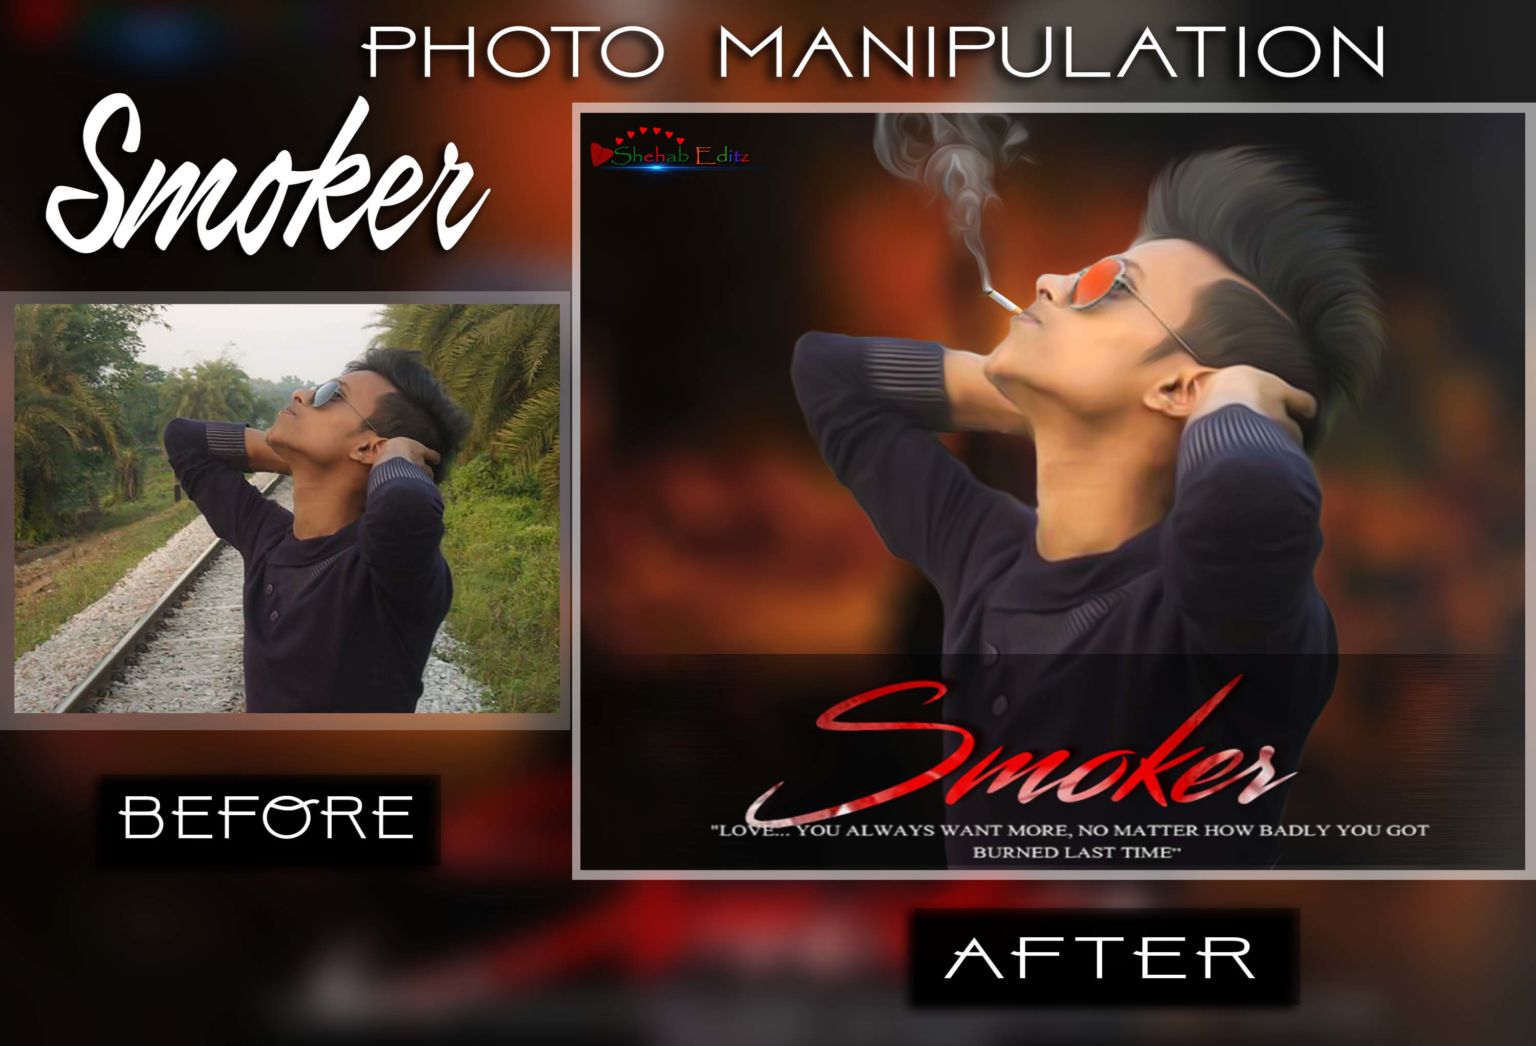 Smoker Photo manipulation | আপনার ছবিতে সিগারেট ও ধোয়া যোগ করুন ফটোশপের মাধ্যমে | ভিডিও টিউটোরিয়াল